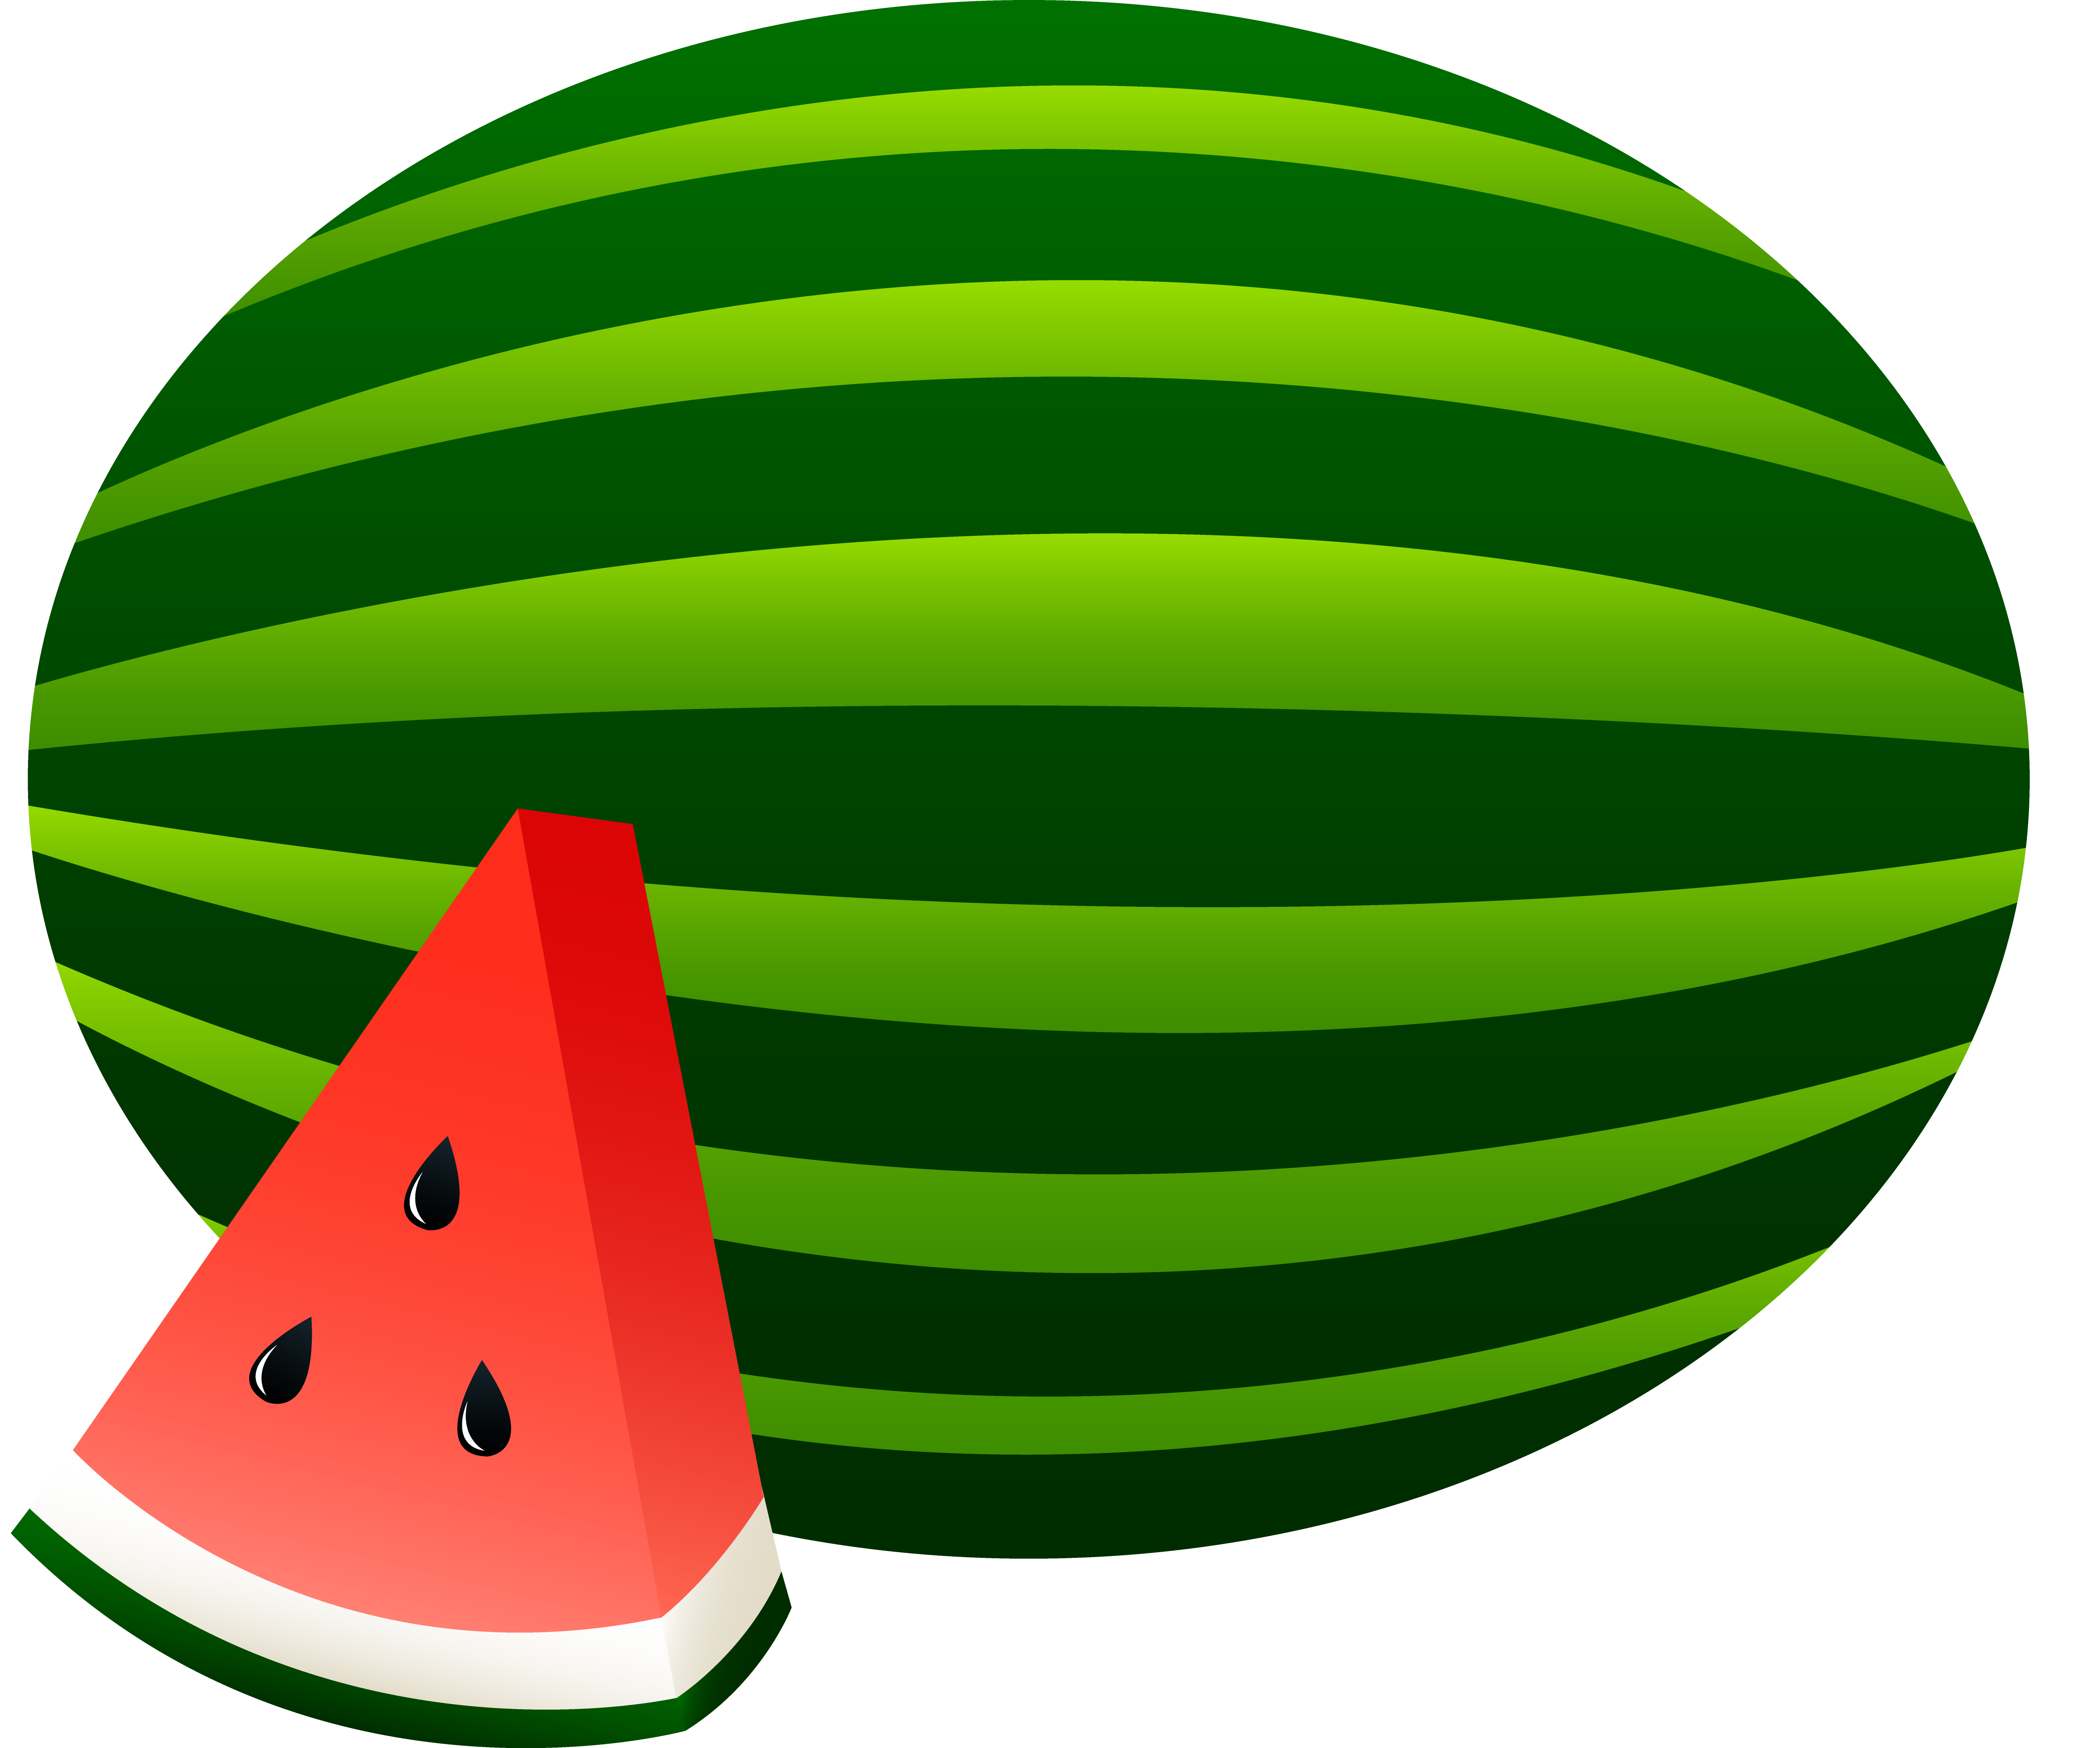 Water melon clipart